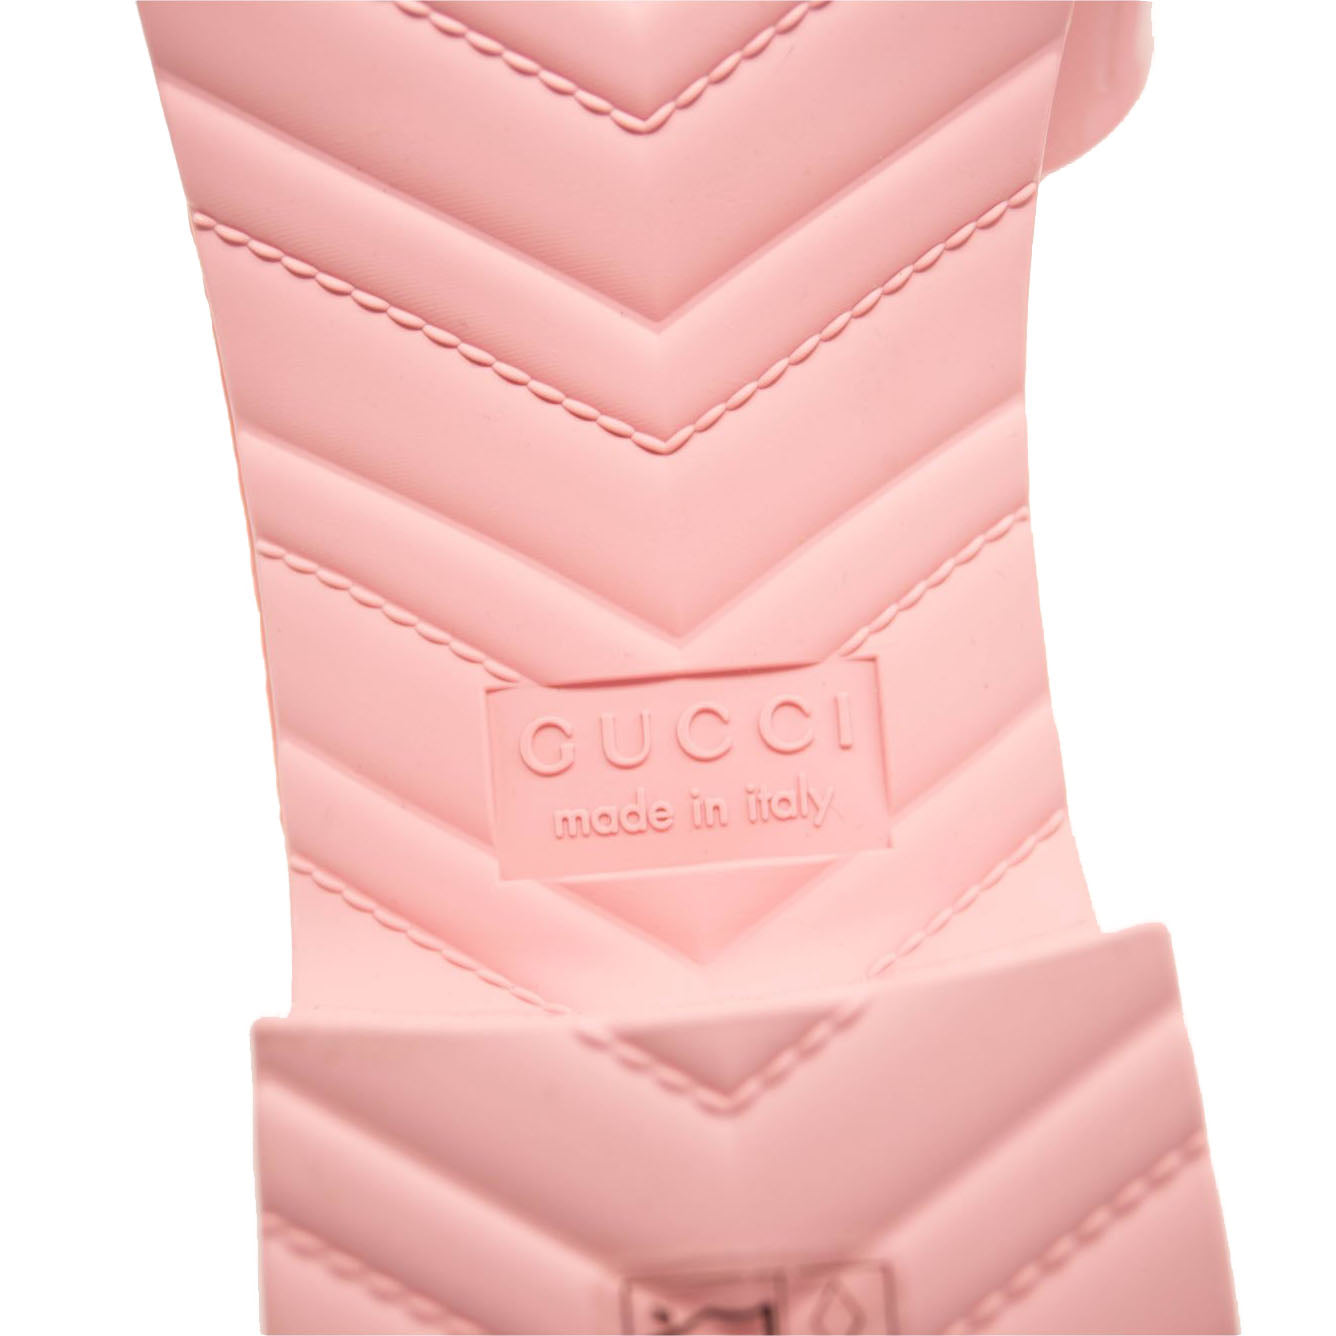 Sandal Gucci Pink size 39 EU in Rubber - 34532037